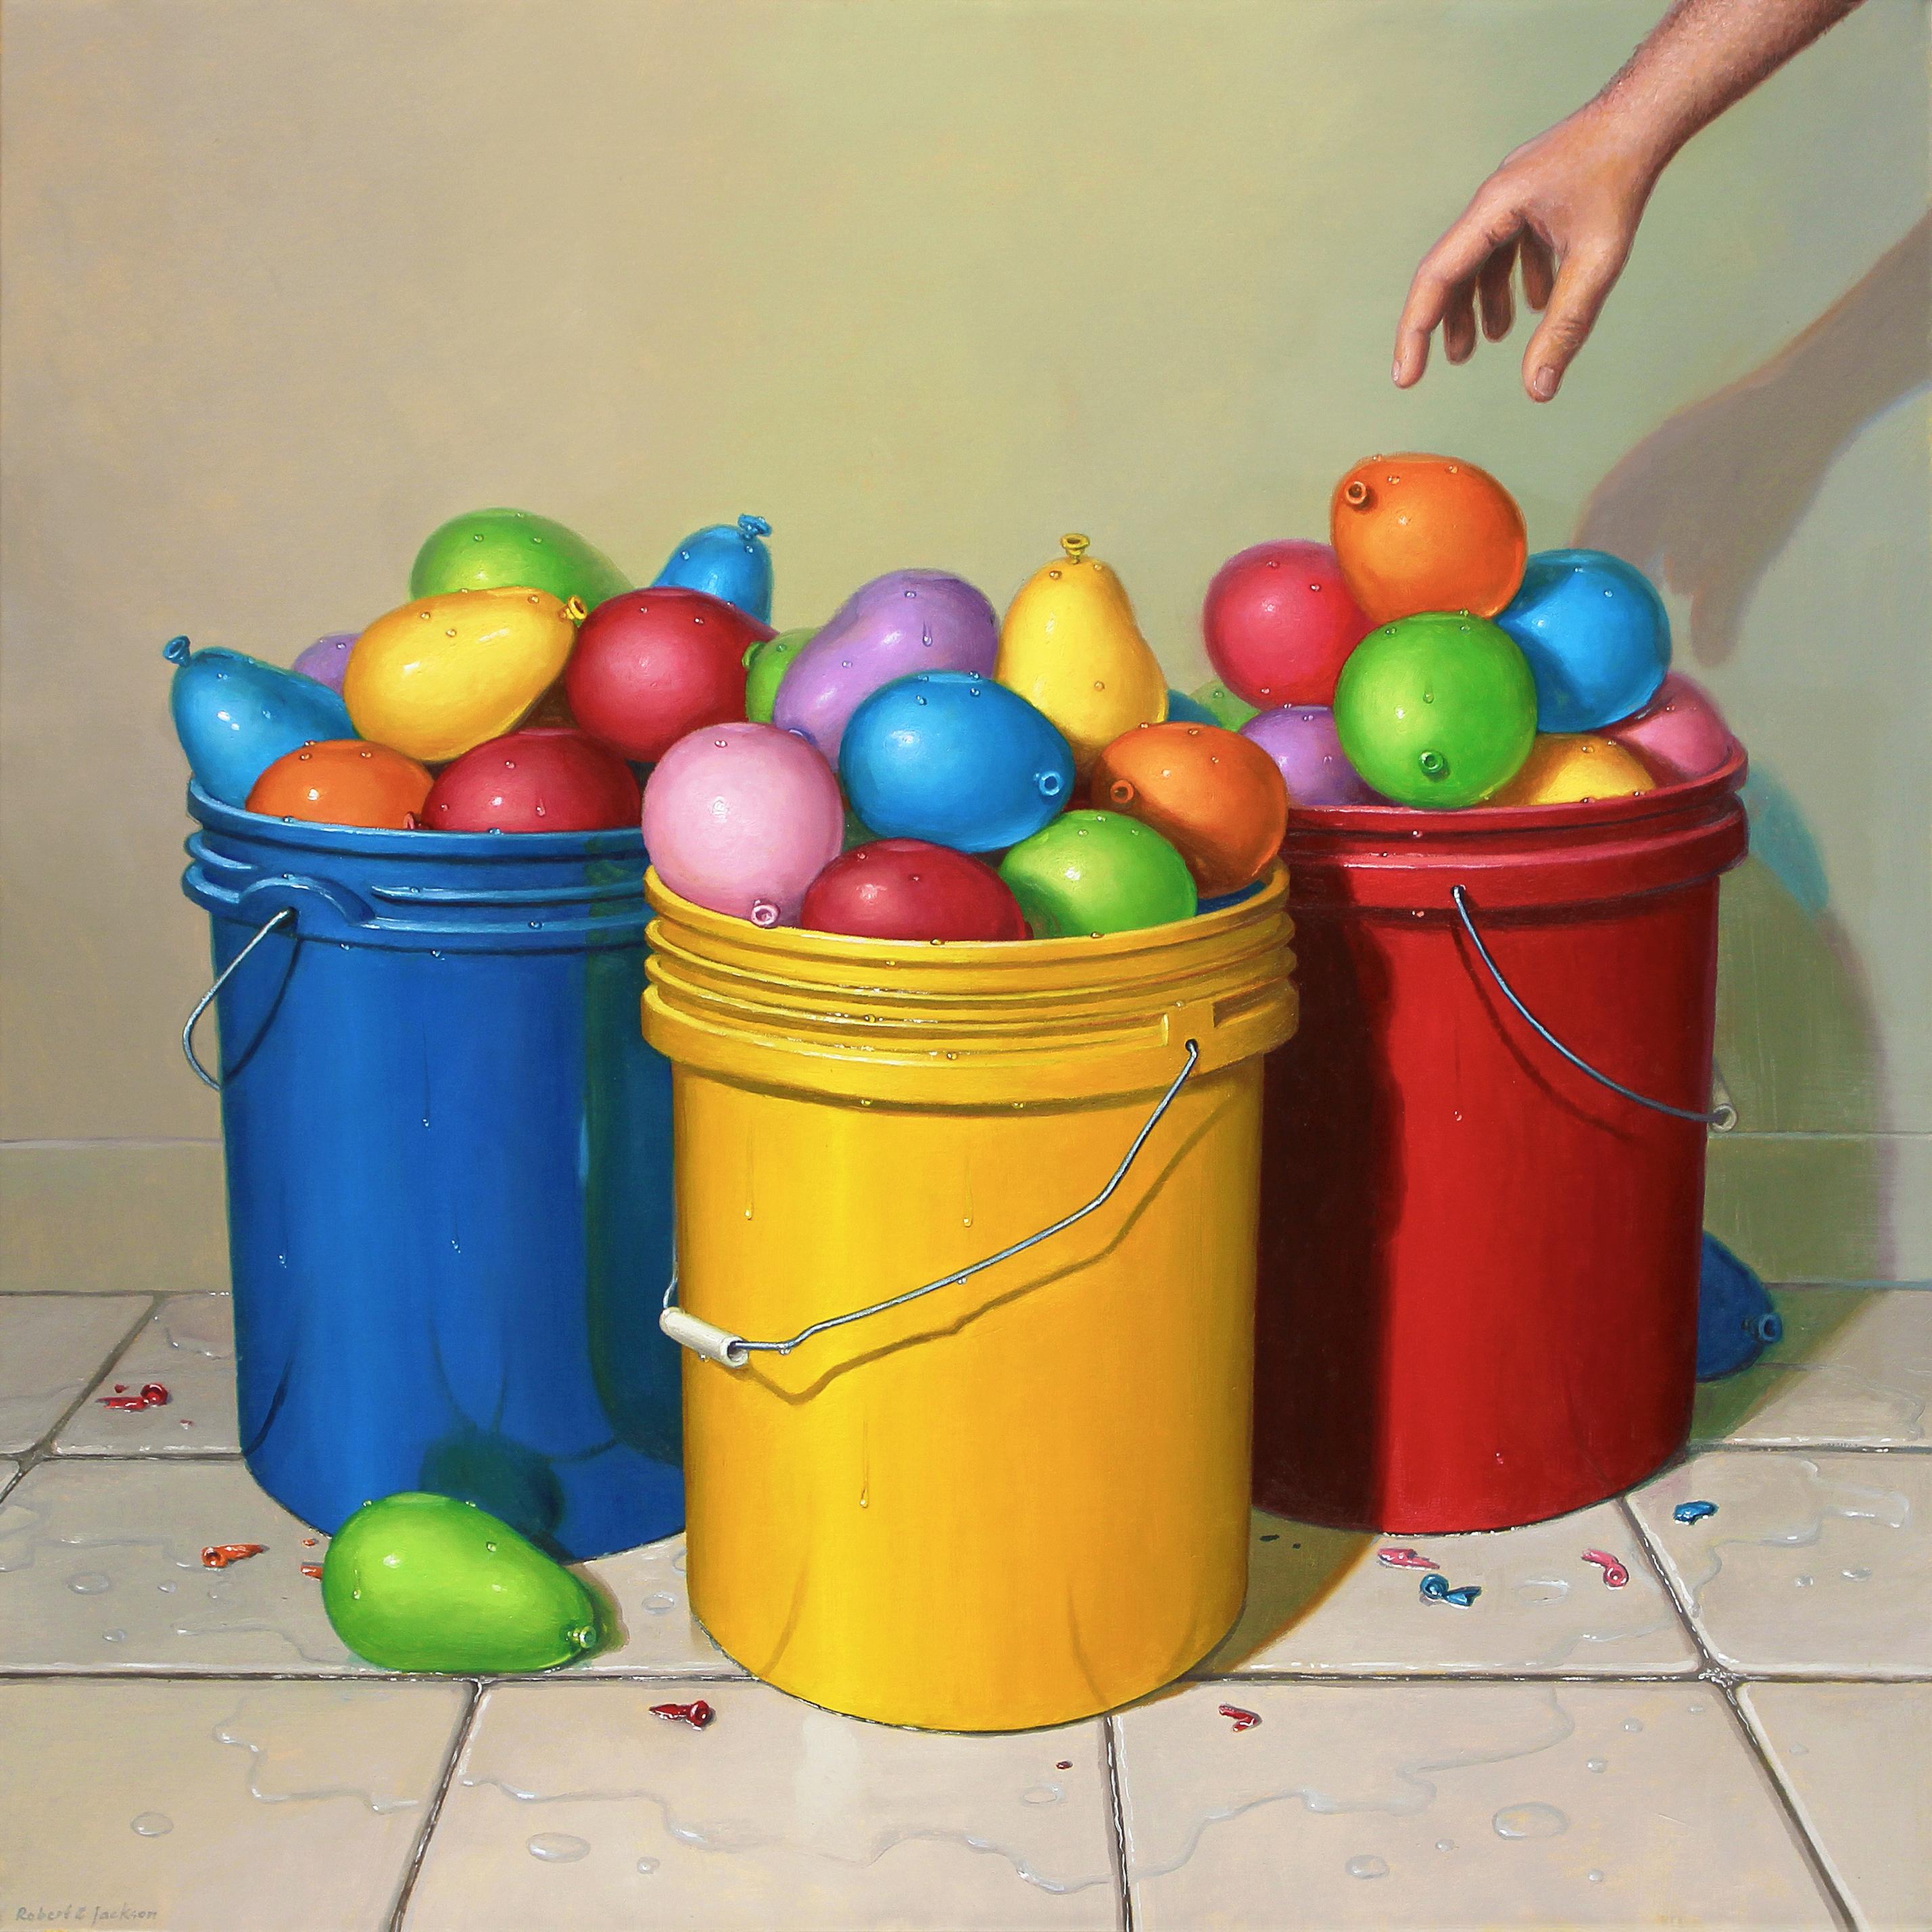 Robert Jackson Still-Life Painting – READY - Realismus / Ölgemälde / Contemporary / Humor / Luftballons